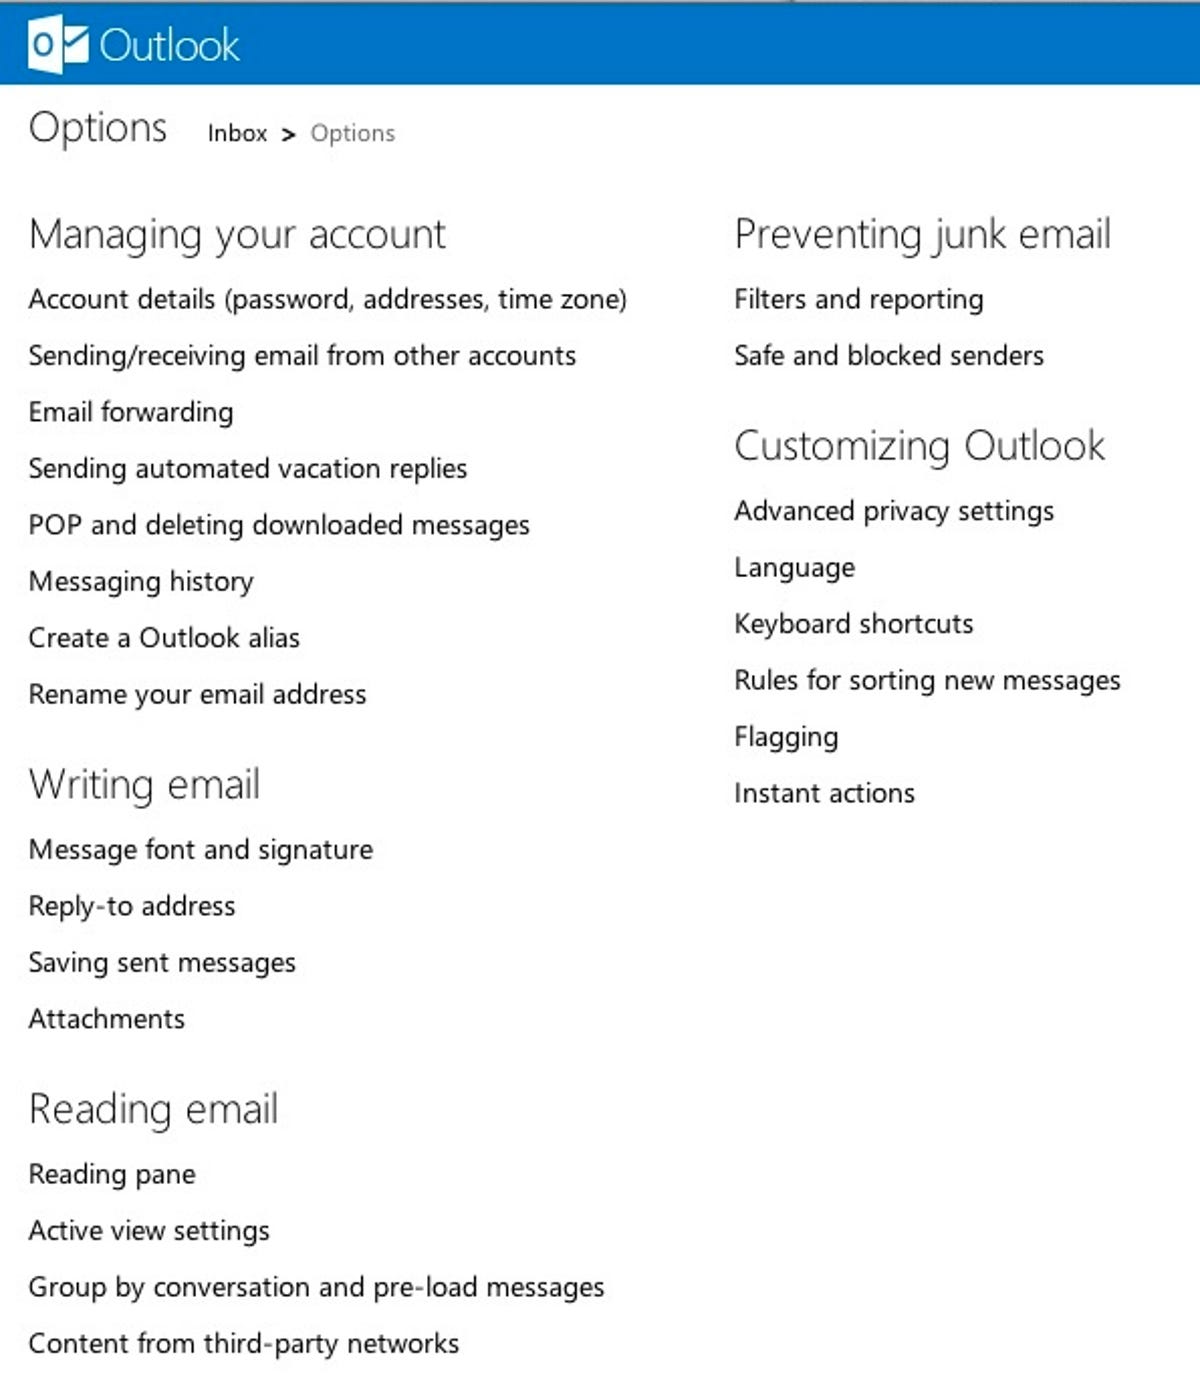 Outlook.com options categories